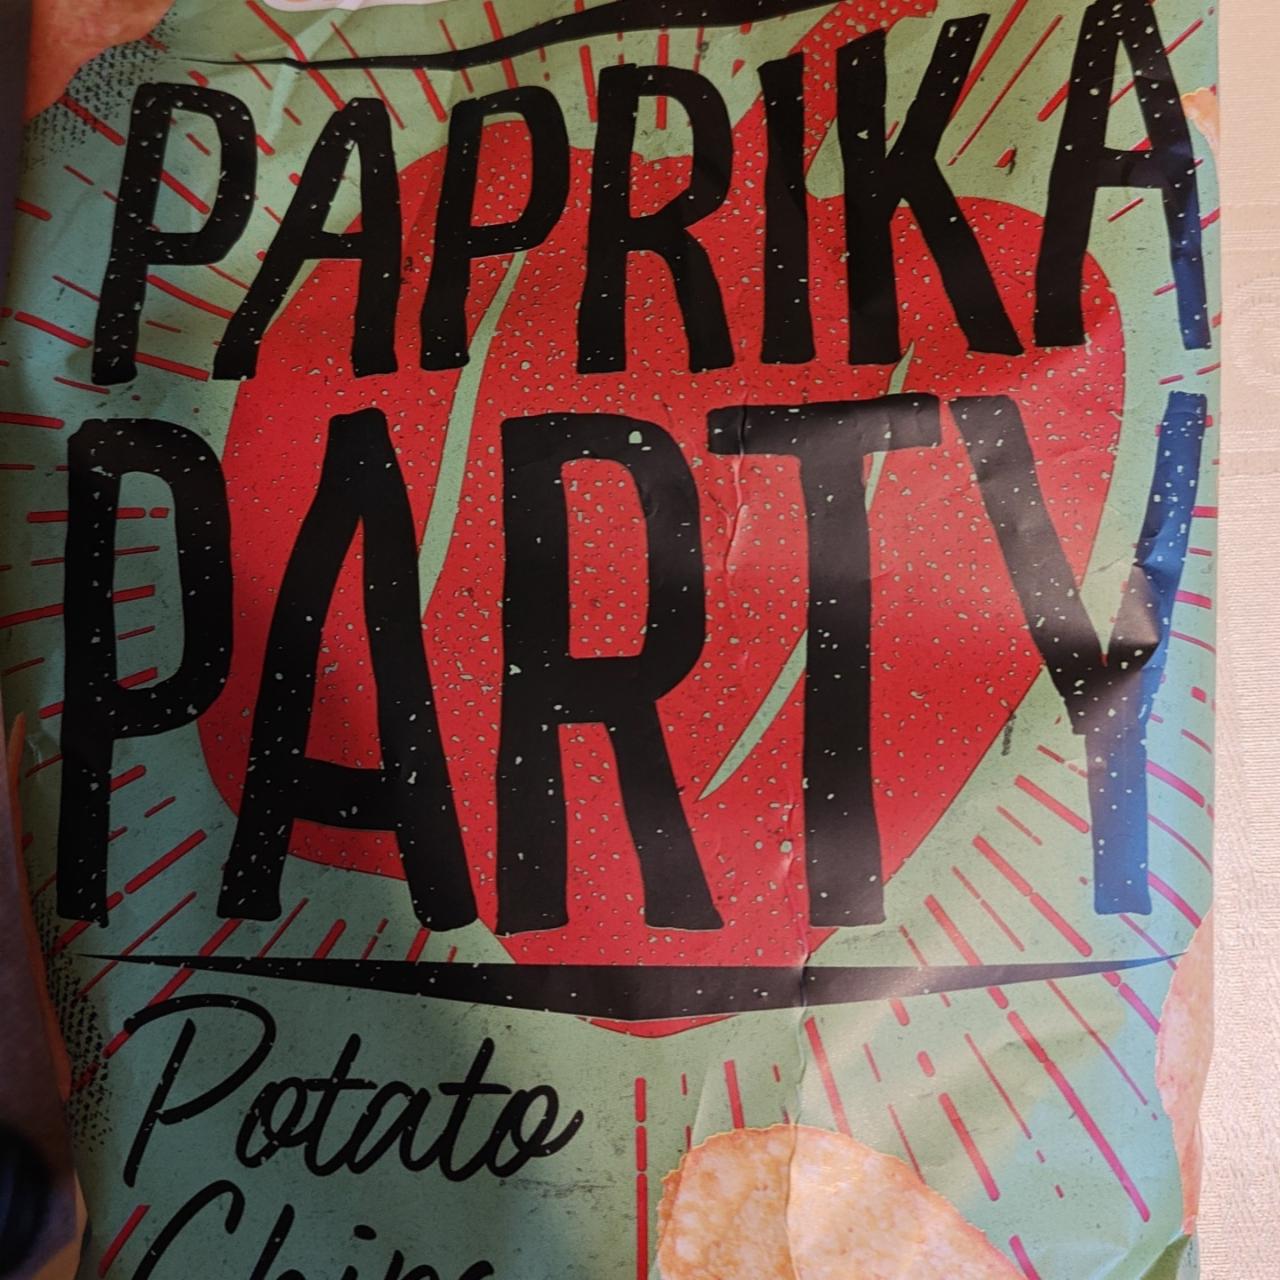 Fotografie - Potato Chips Paprika Party Globus